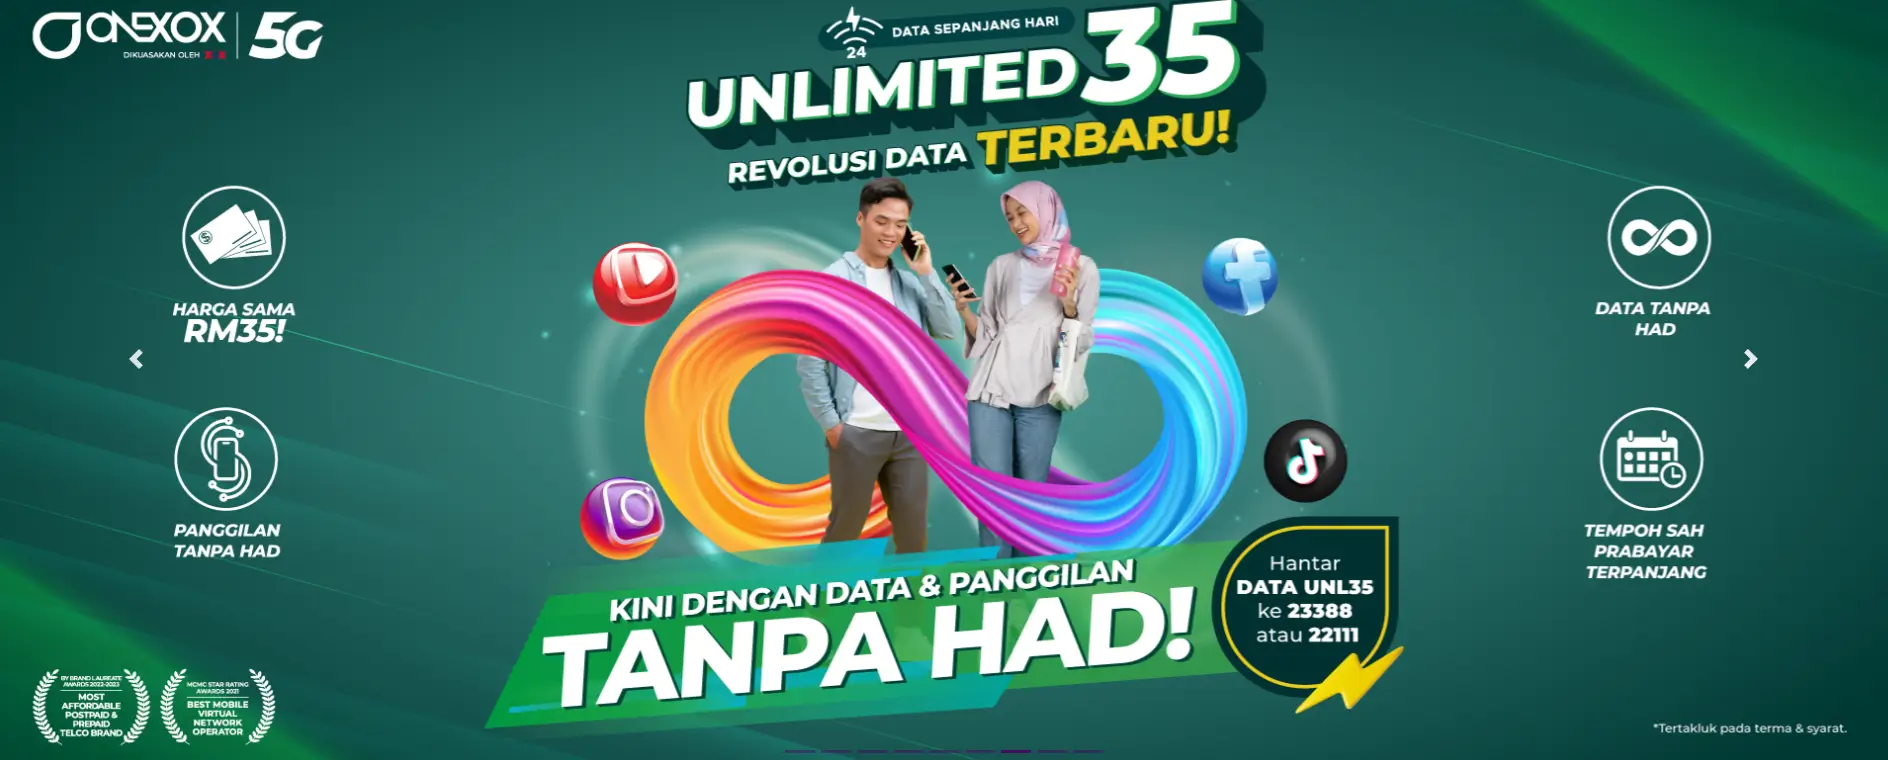 unlimited data hotspot prepaid UNL35